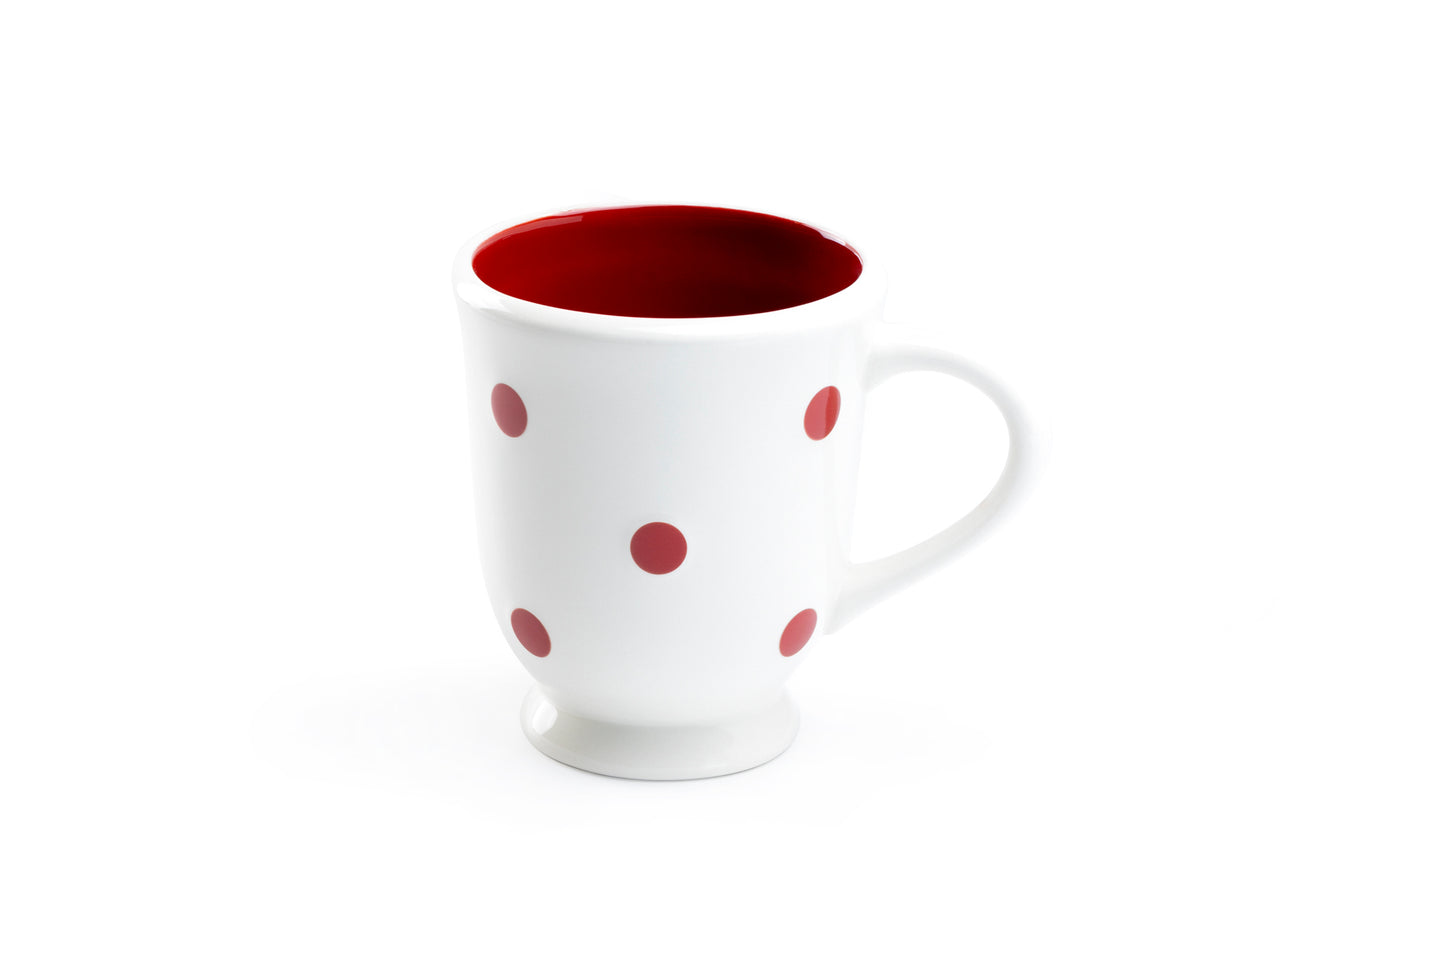 Terramoto Ceramic Polka Dots Mug - Red on White